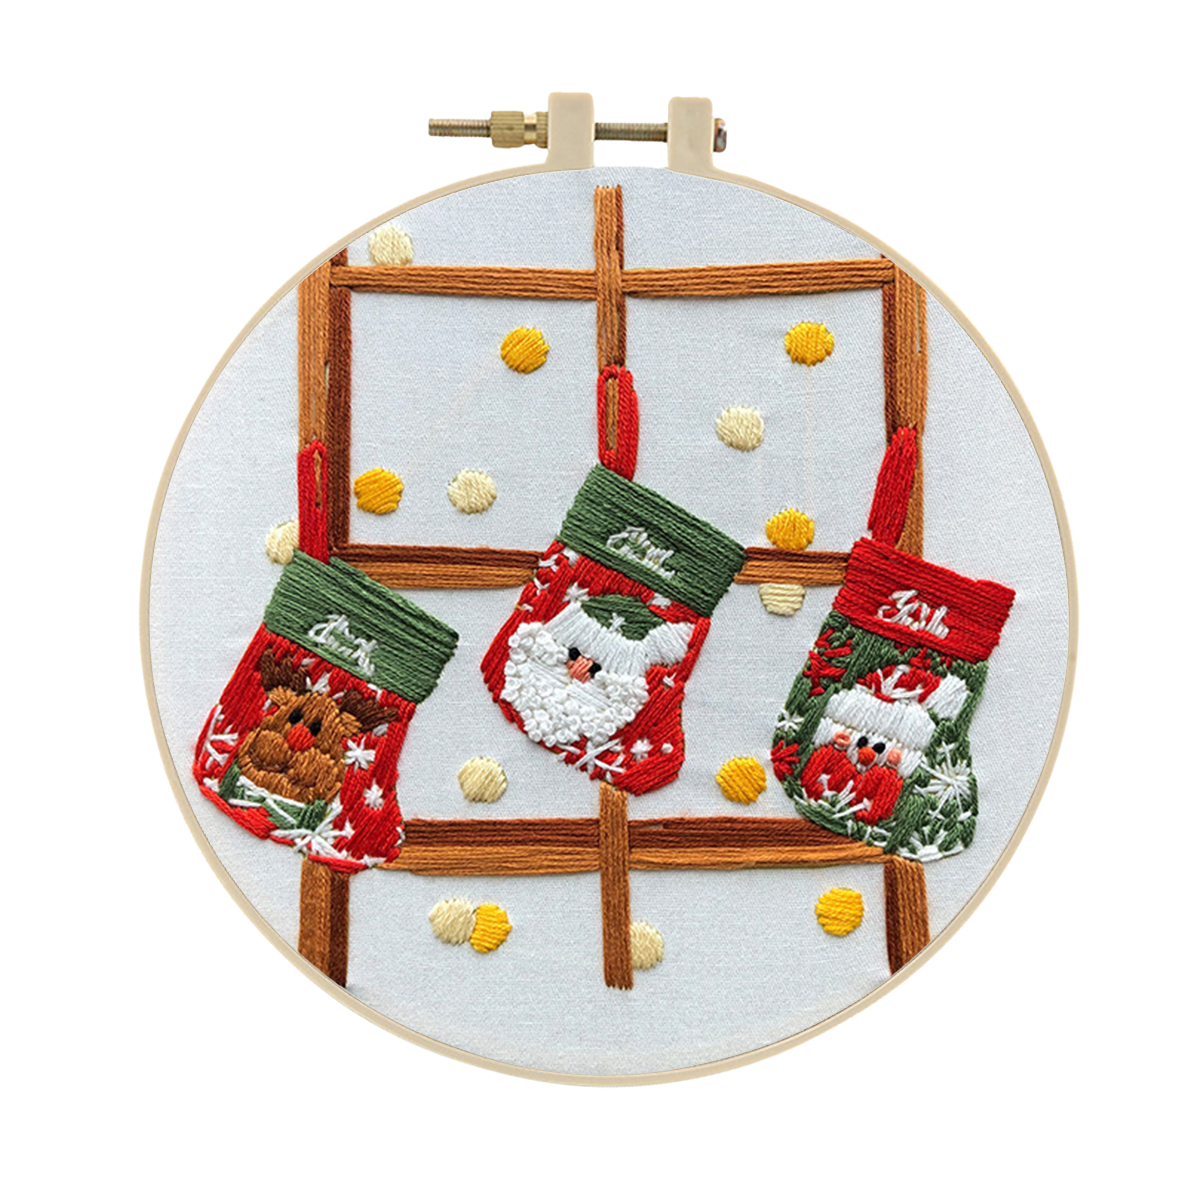 Handmade Christmas Embroidery Kit Cross stitch kit for Adult - Three Cute Socks Pattern